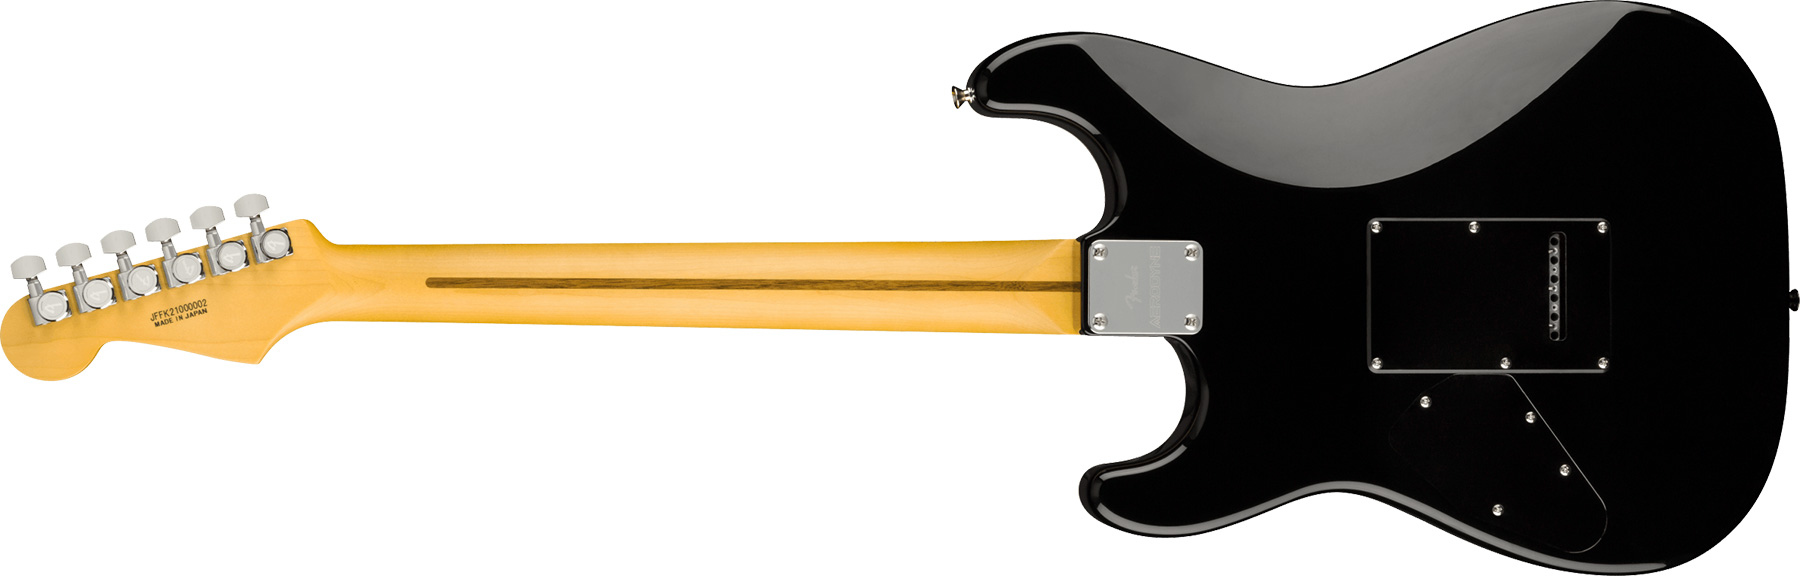 Fender Strat Aerodyne Special Jap Trem Hss Mn - Hot Rod Burst - E-Gitarre in Str-Form - Variation 1